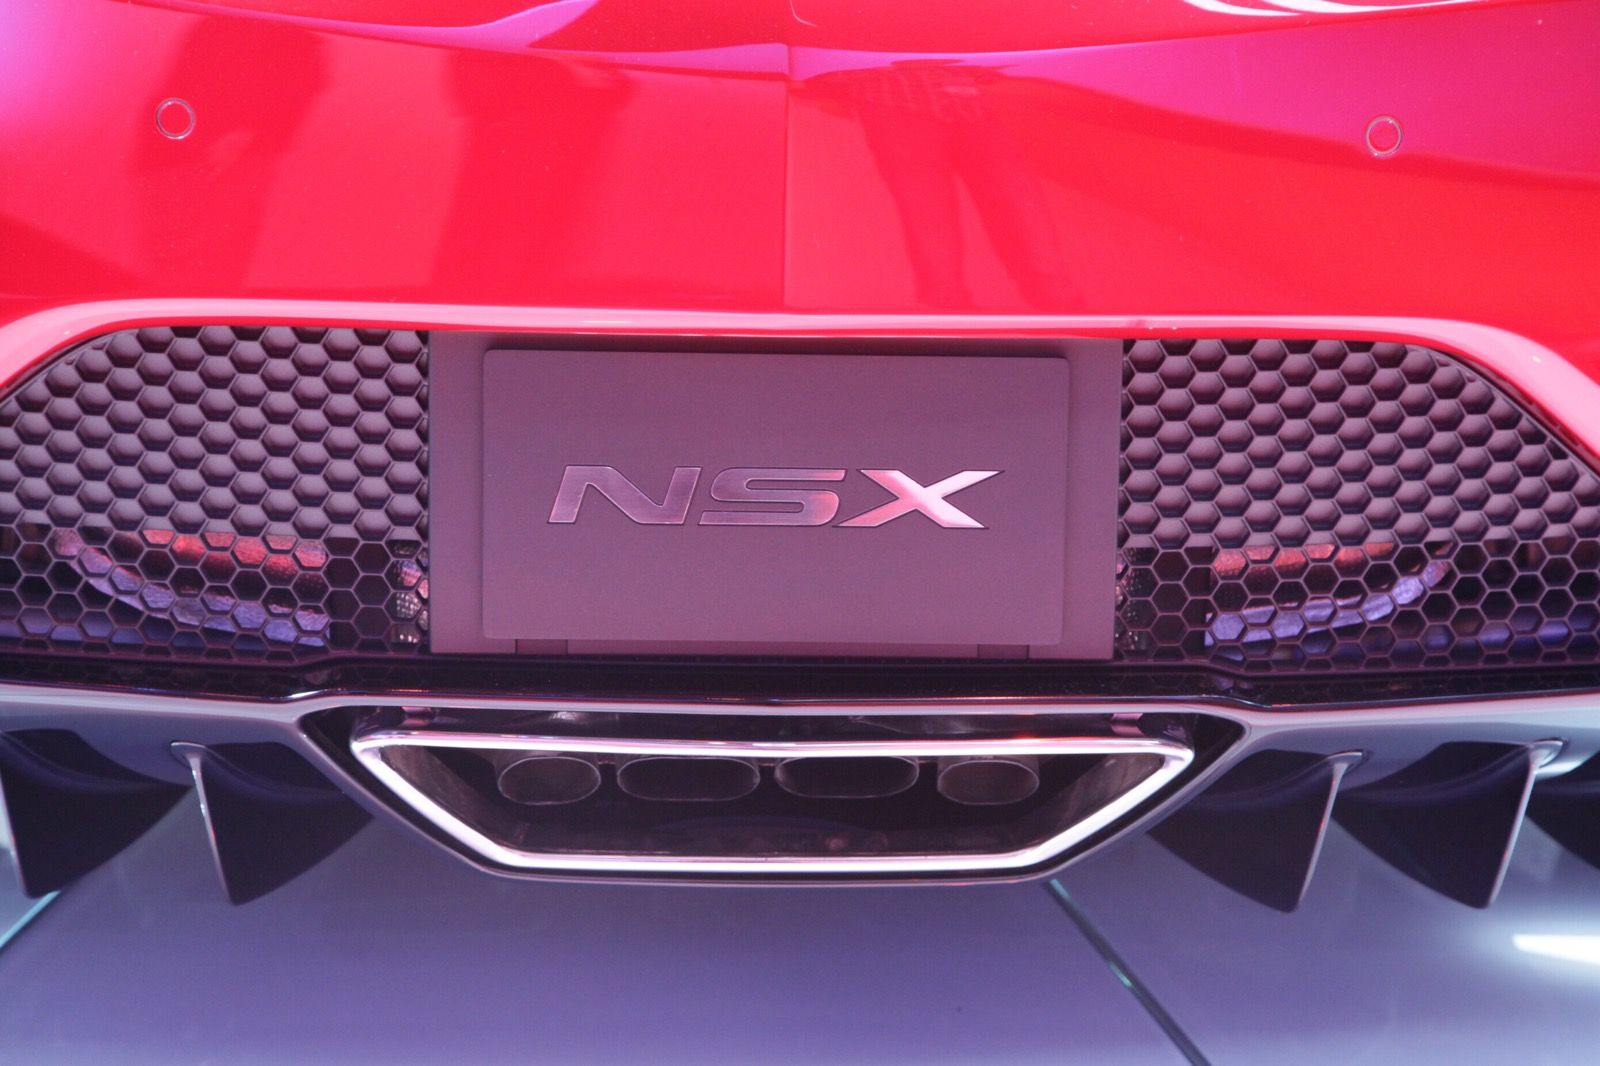 2016 Acura NSX